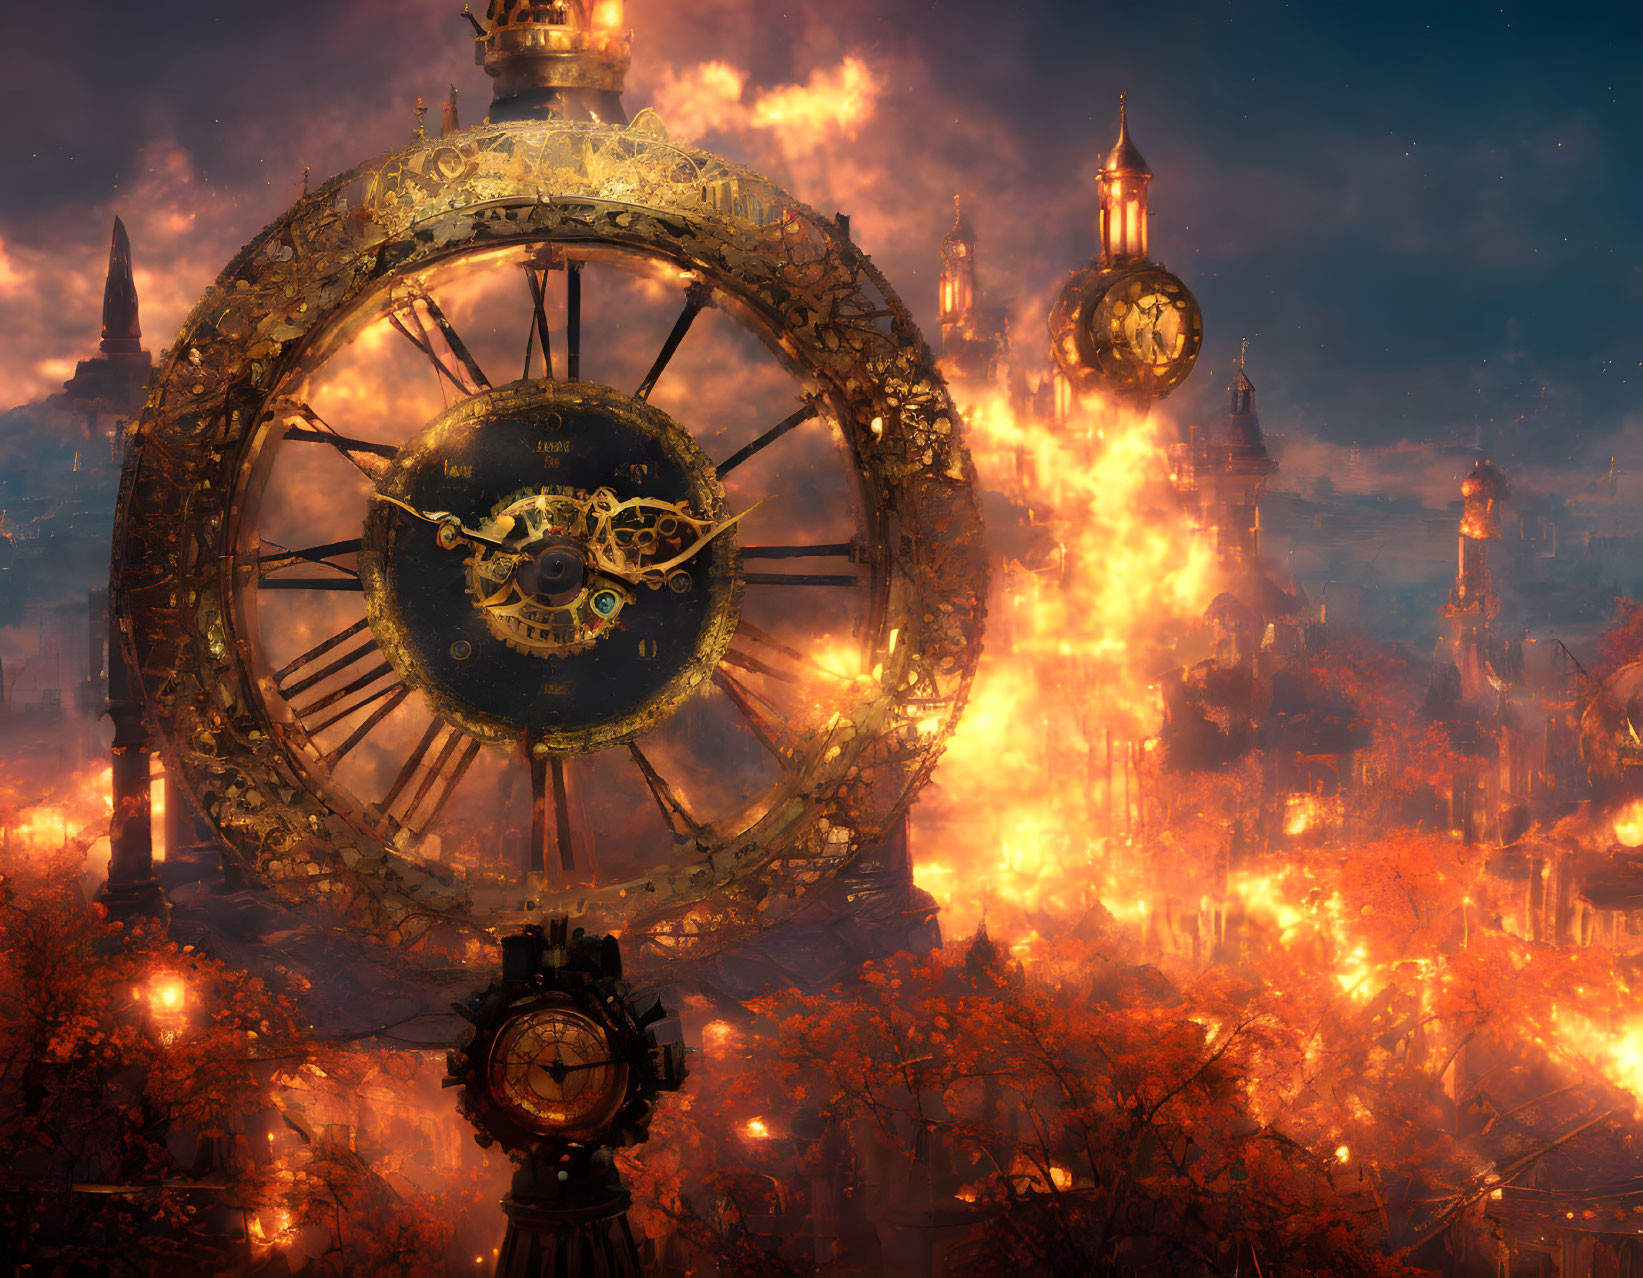 Ornate clock with golden gears against fiery dystopian cityscape